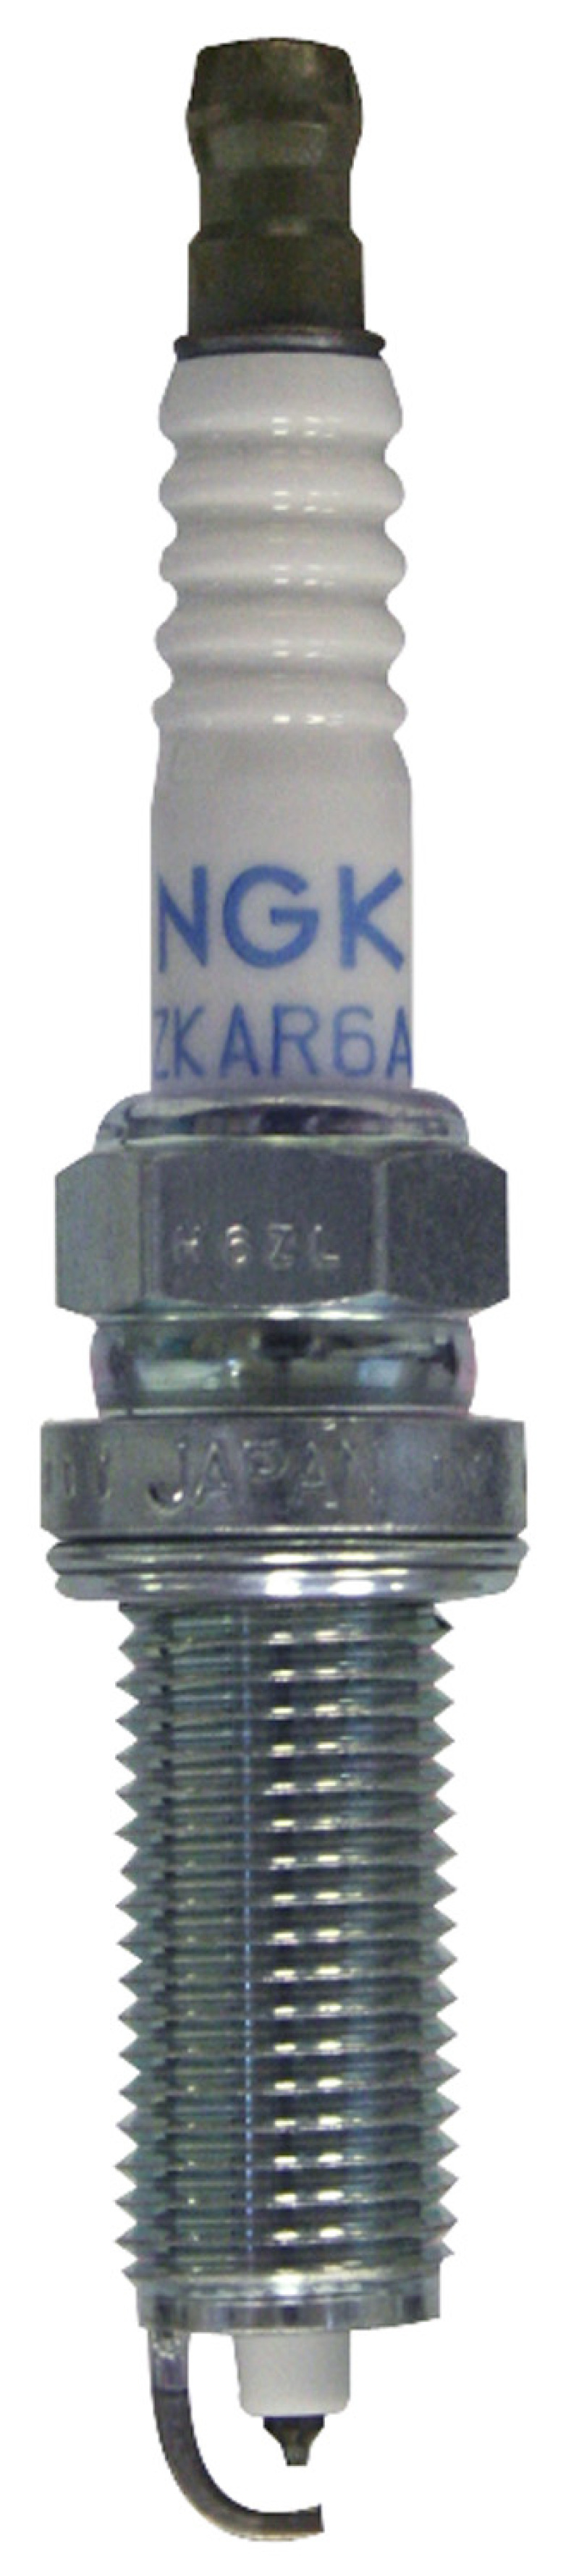 NGK Double Platinum Spark Plug Box of 4 (PLZKAR6A-11) - 5118